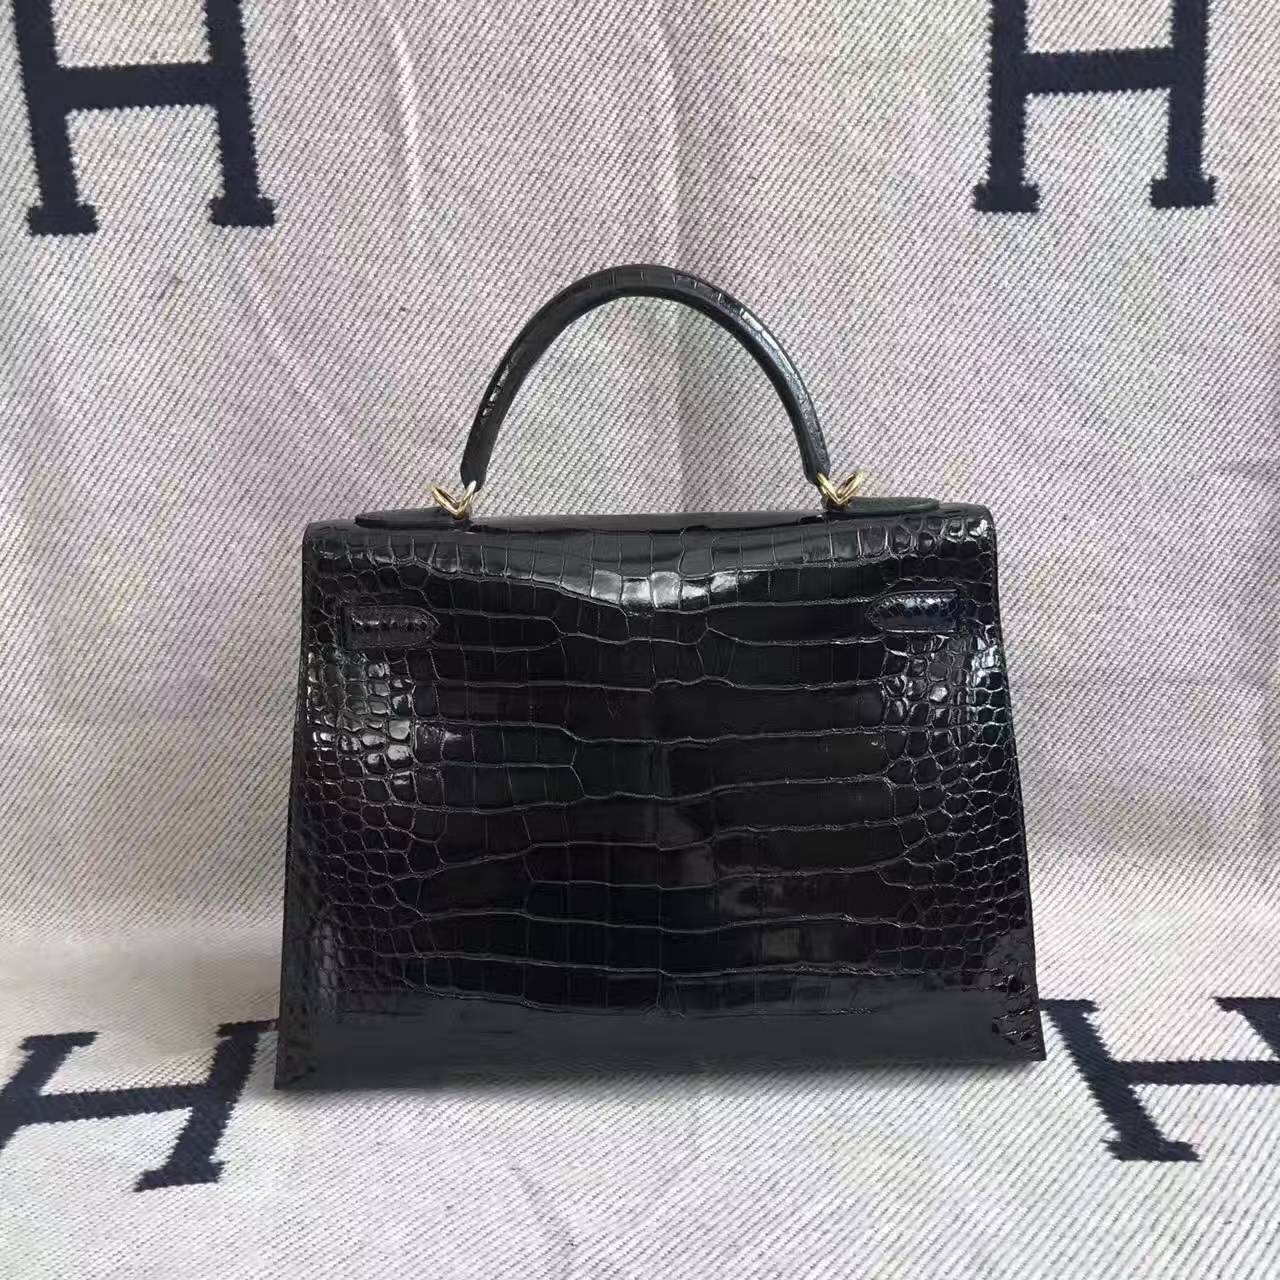 Wholesale Hermes CK89 Black Crocodile Shiny Leather Kelly 32cm Handbag